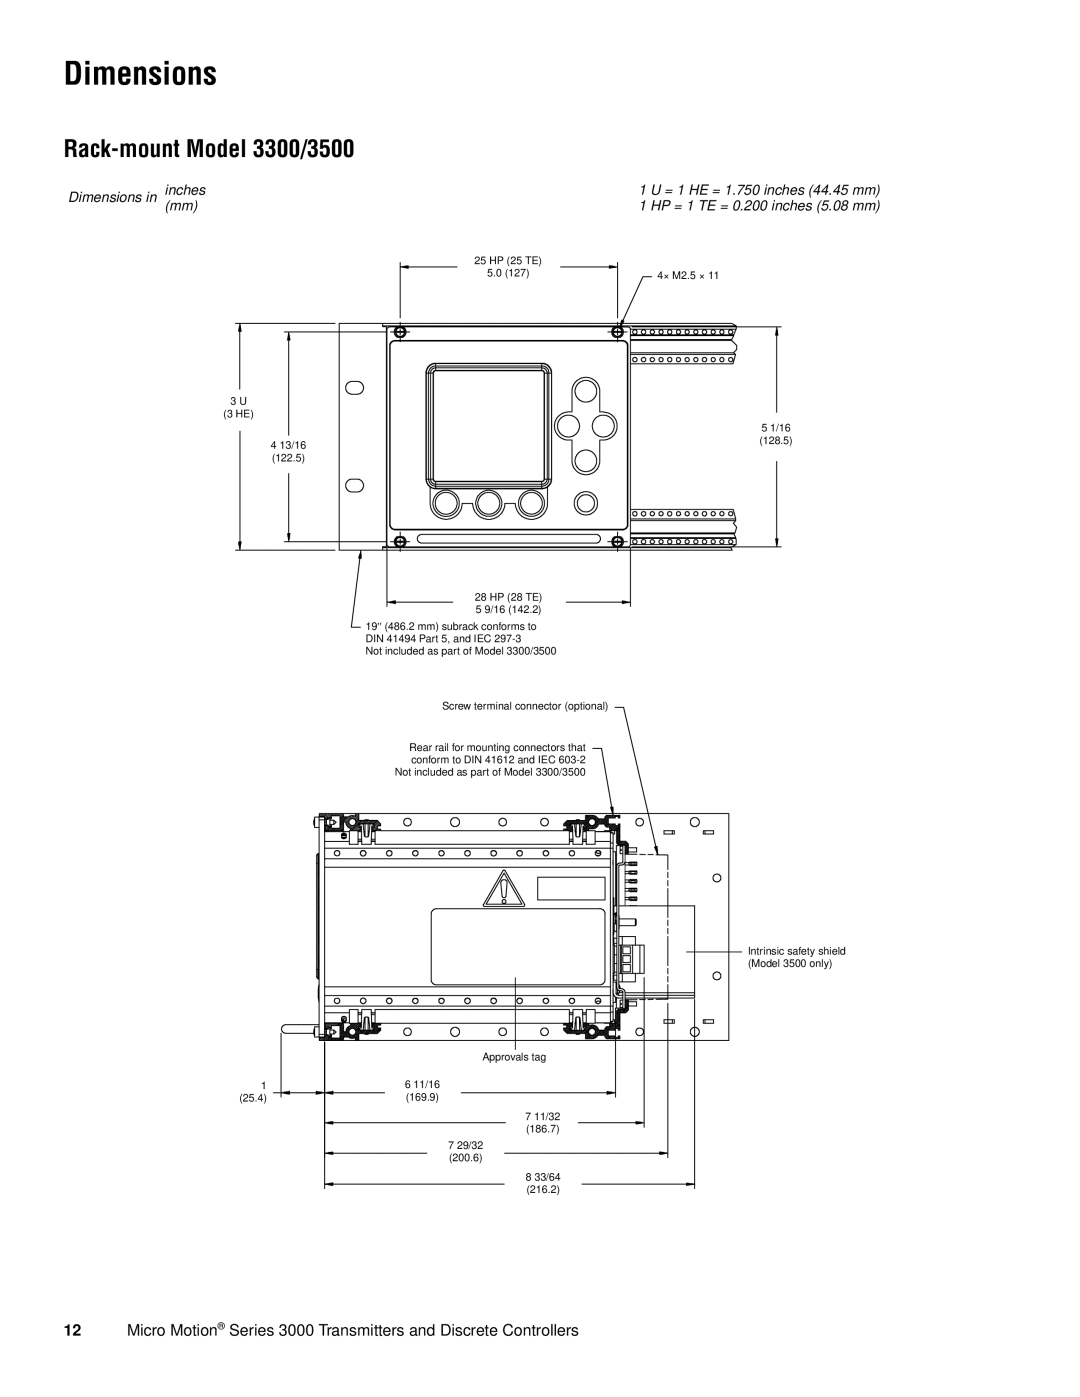 Emerson Series 3000 manual Rack-mountModel 3300/3500, Dimensions in, 1 U = 1 HE = 1.750 inches 44.45 mm 